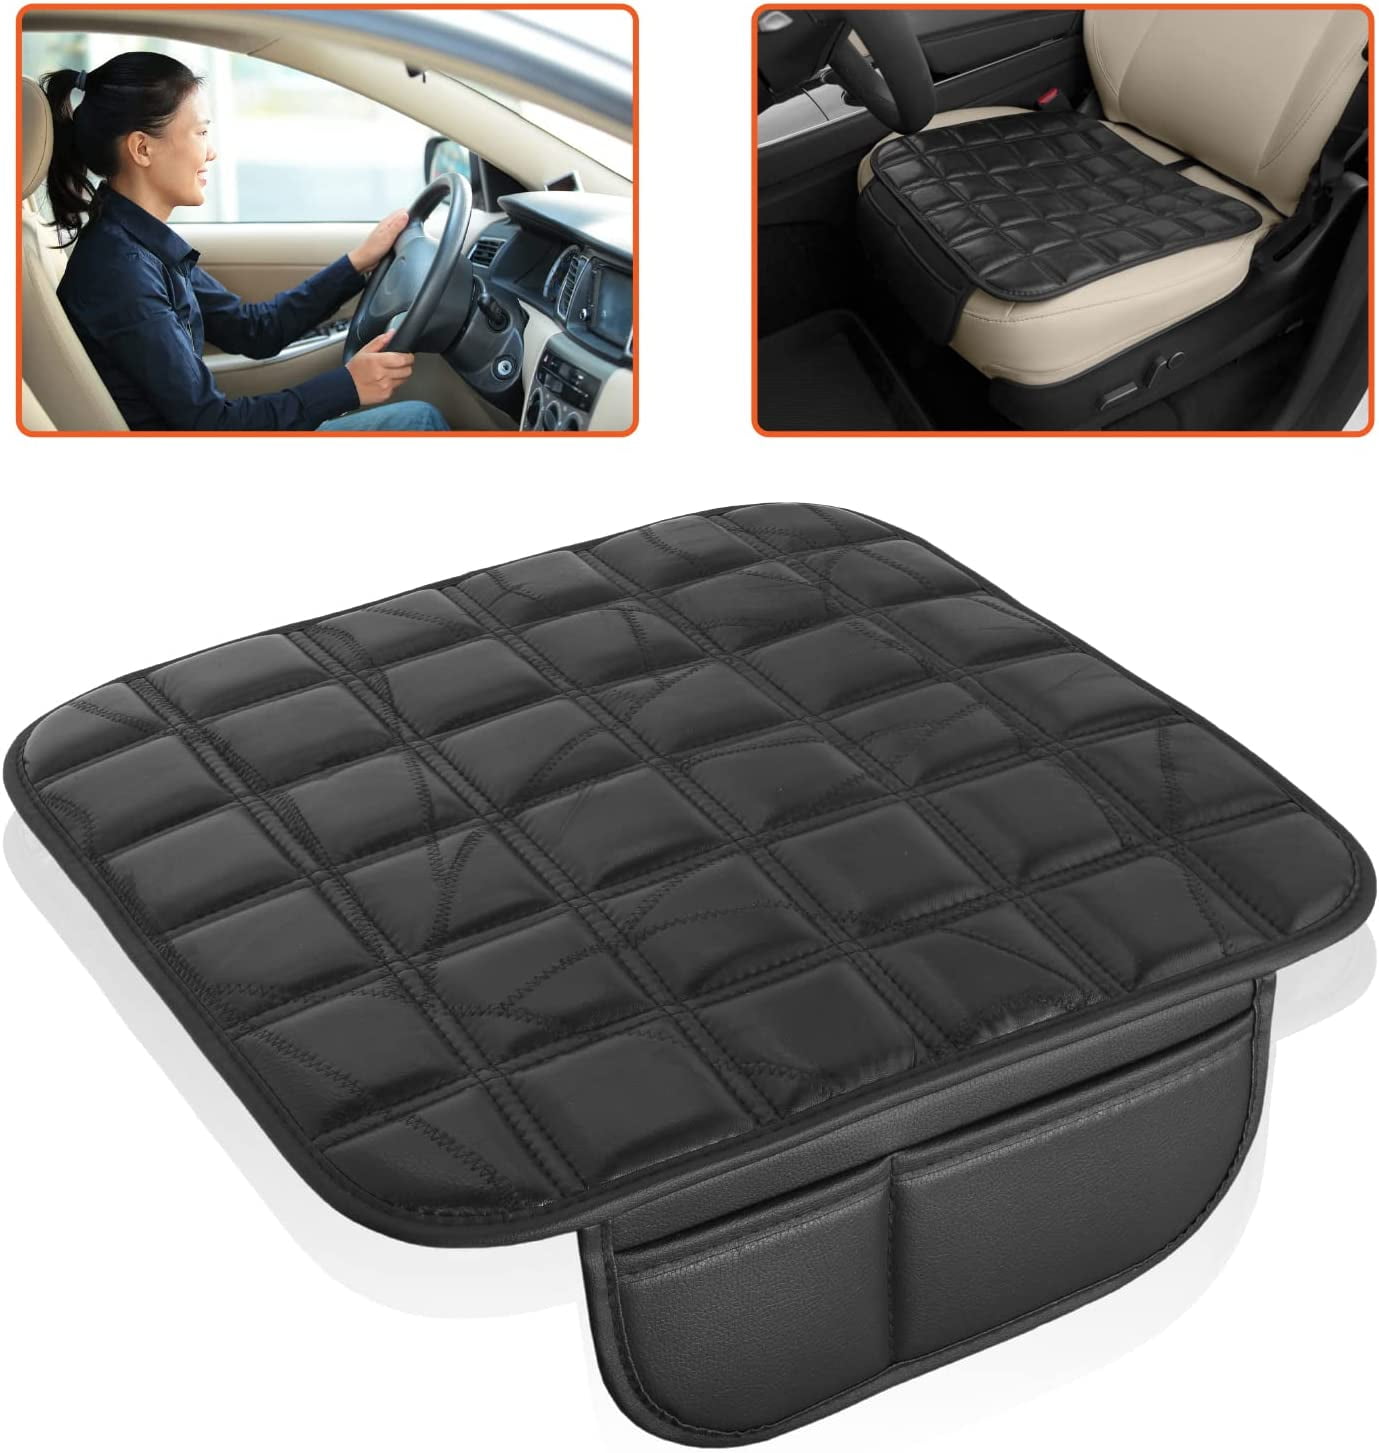 ZHOOGE Car Seat Cushion, Car Seat Pad for Sciatica Tailbone Pain Relief, Memory Foam Driver Seat Cushion to Improve Driving View, Seat Cushion